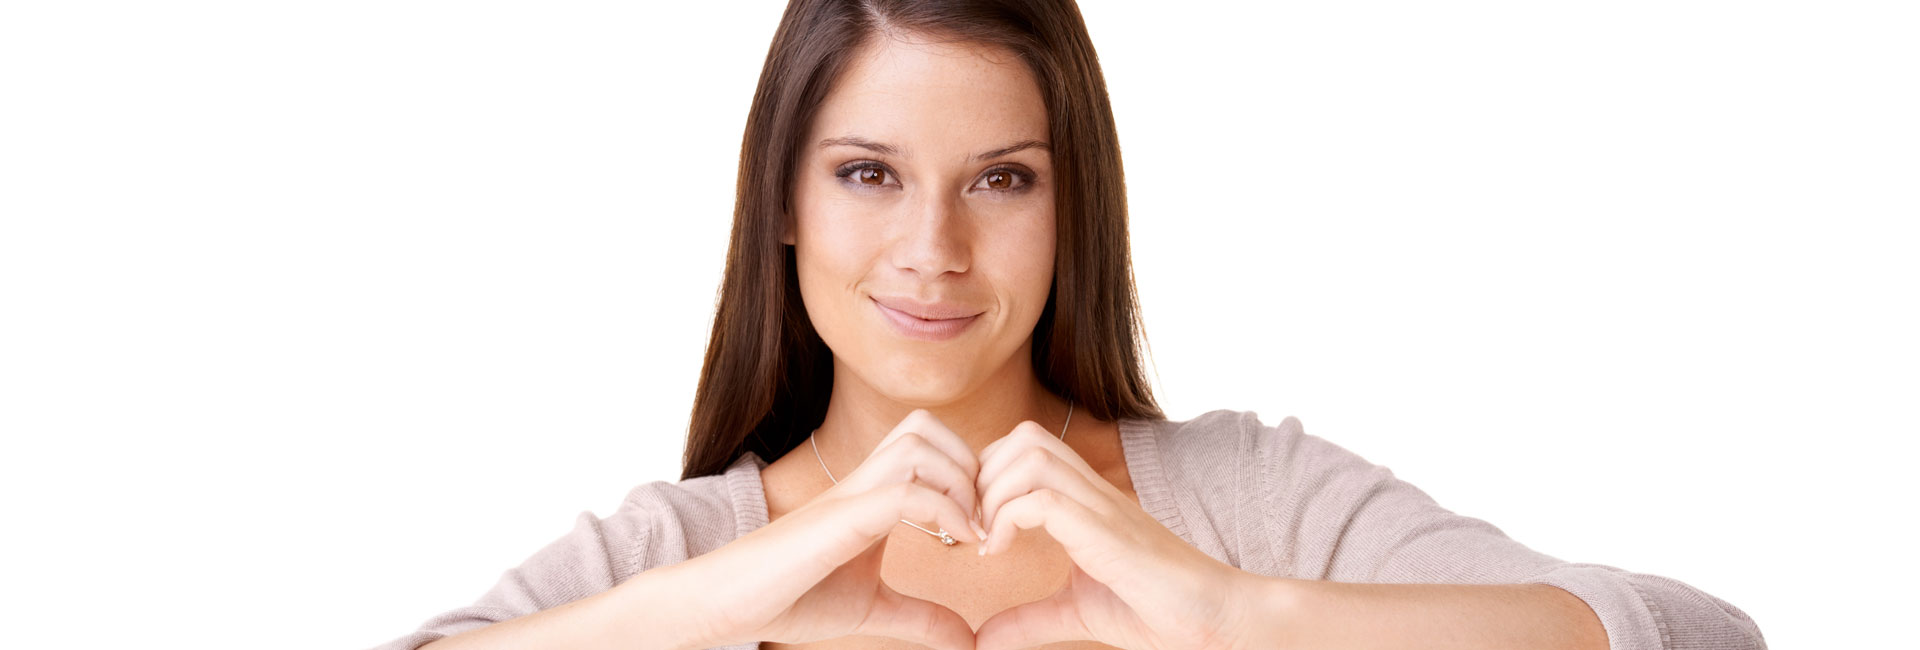 woman showing hearts symbol